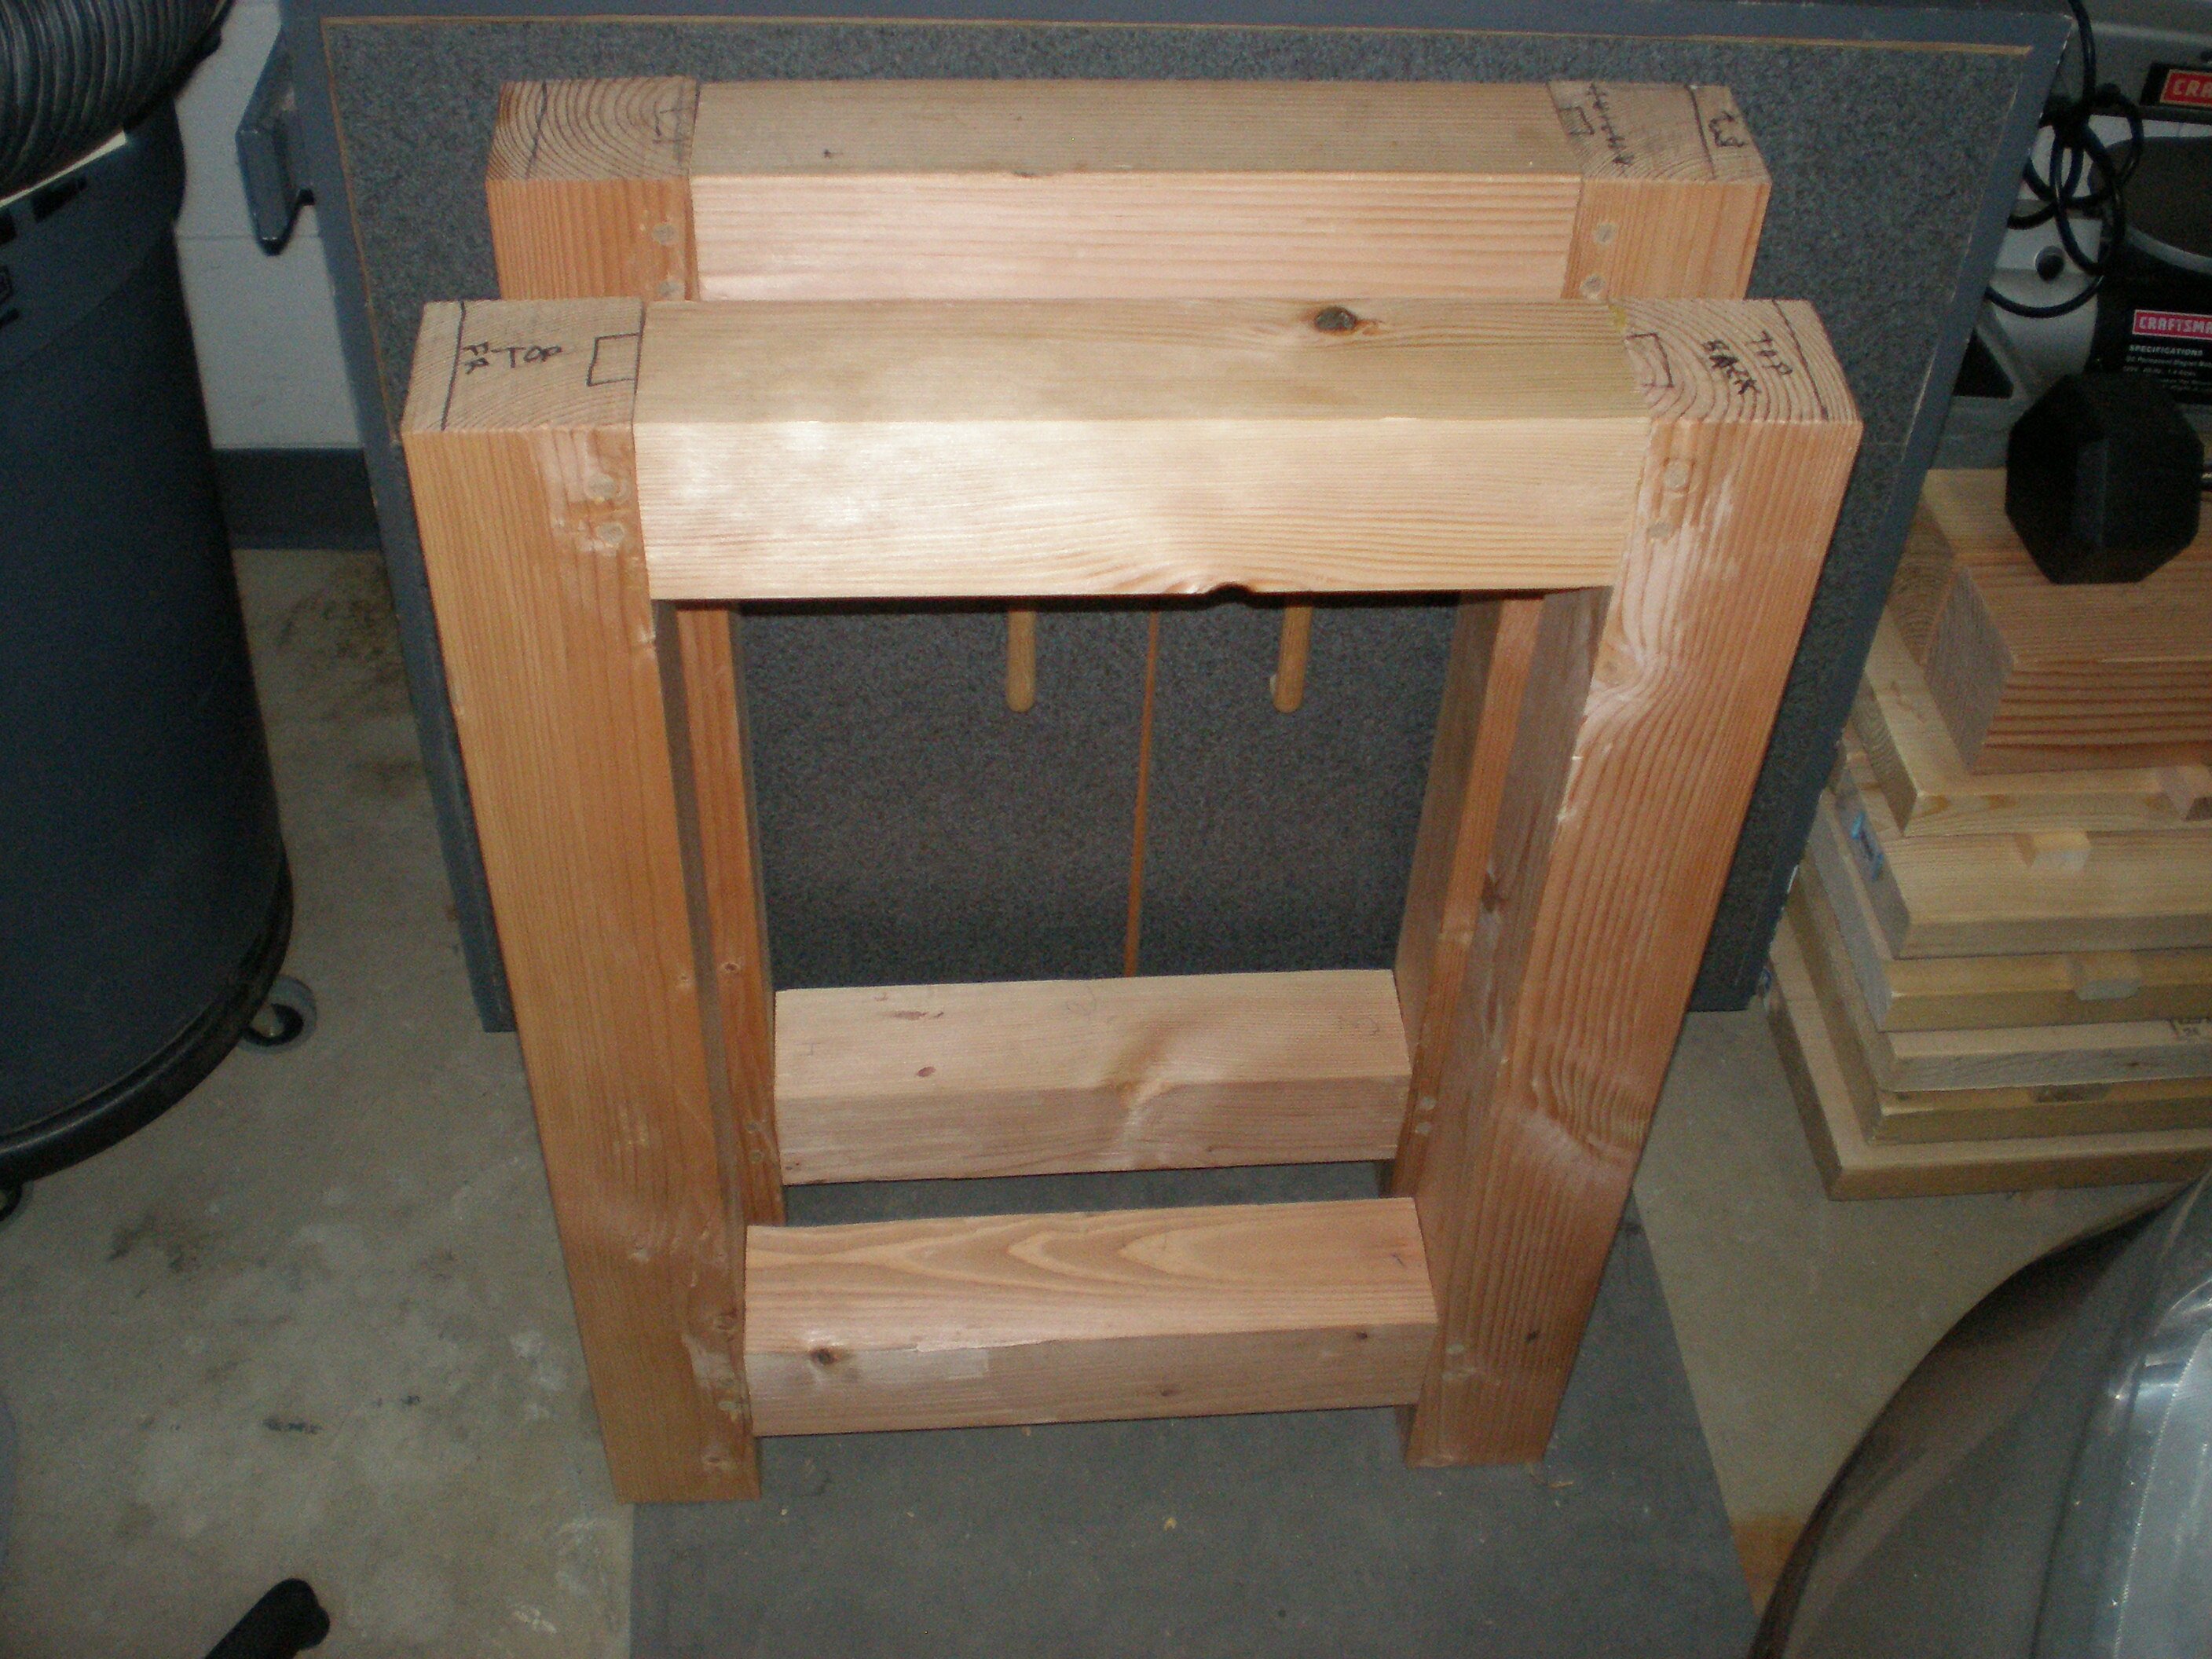 Work Bench Legs for Best Your Workspace Furniture Design: Workbench Frame Kits | Kreg Tables | Work Bench Legs